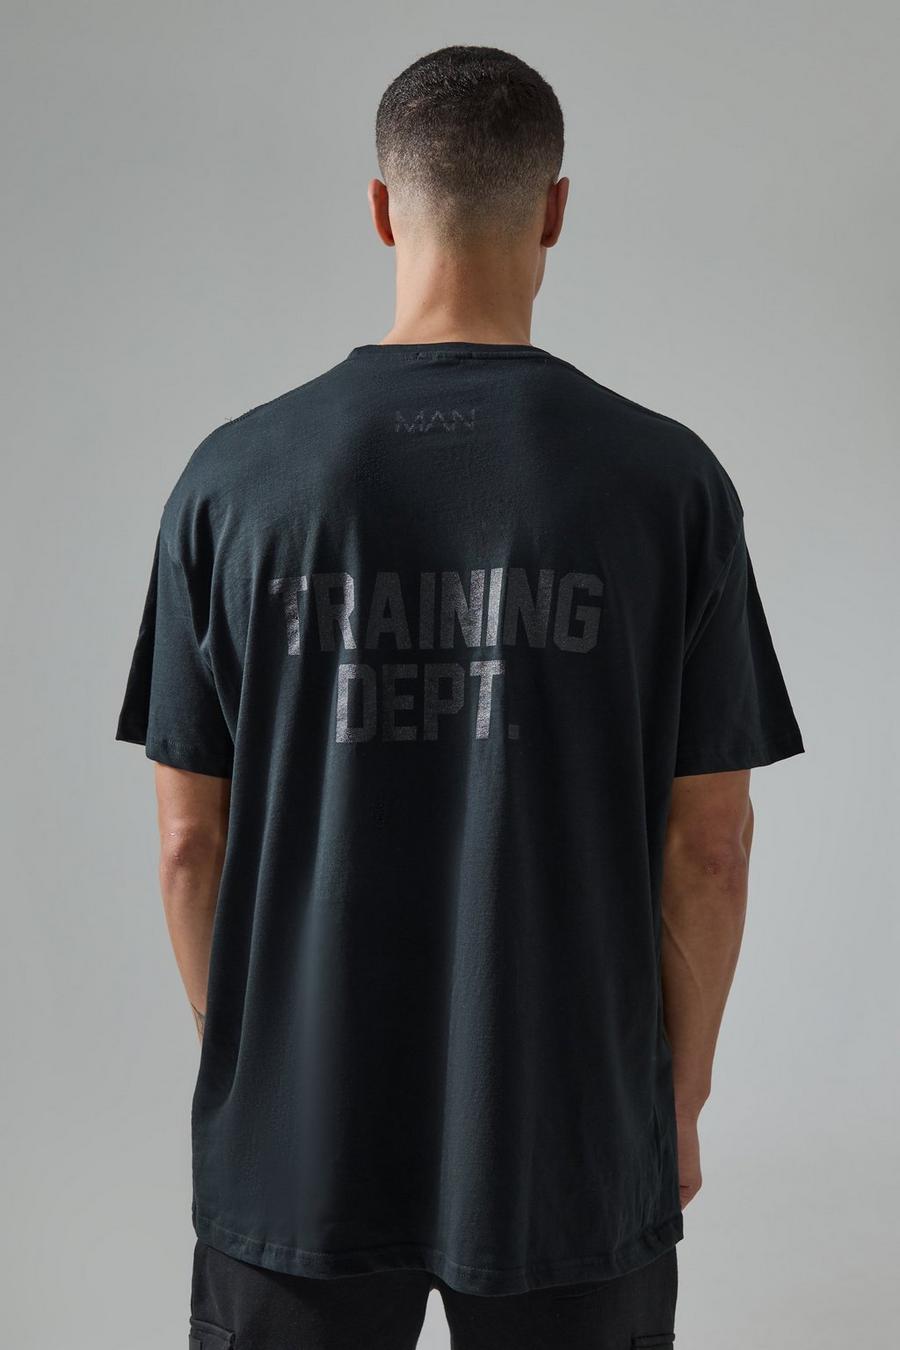 Black Oversized Active Training Dept T-Shirt image number 1